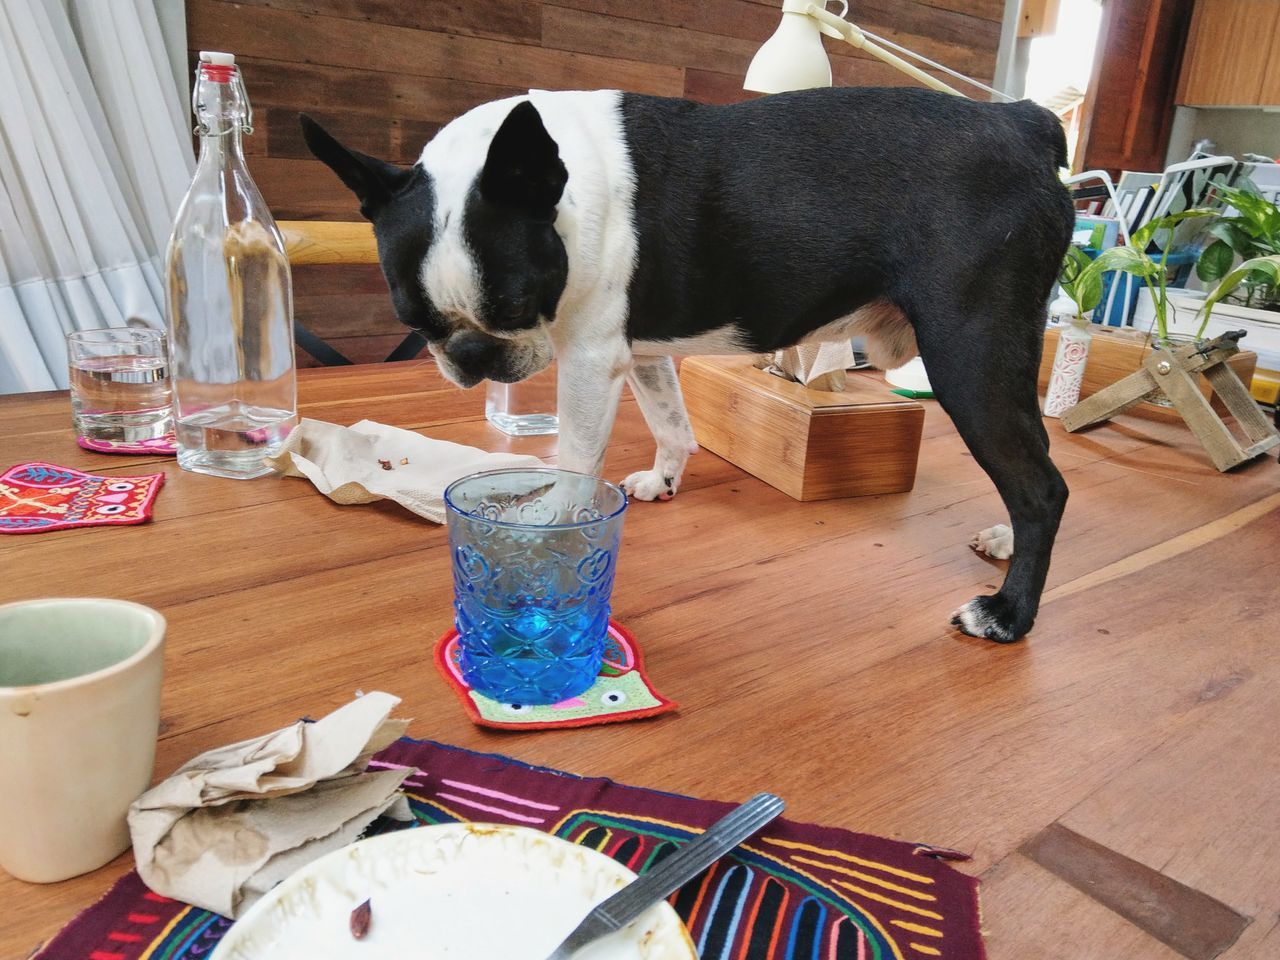 Dog on dinner table